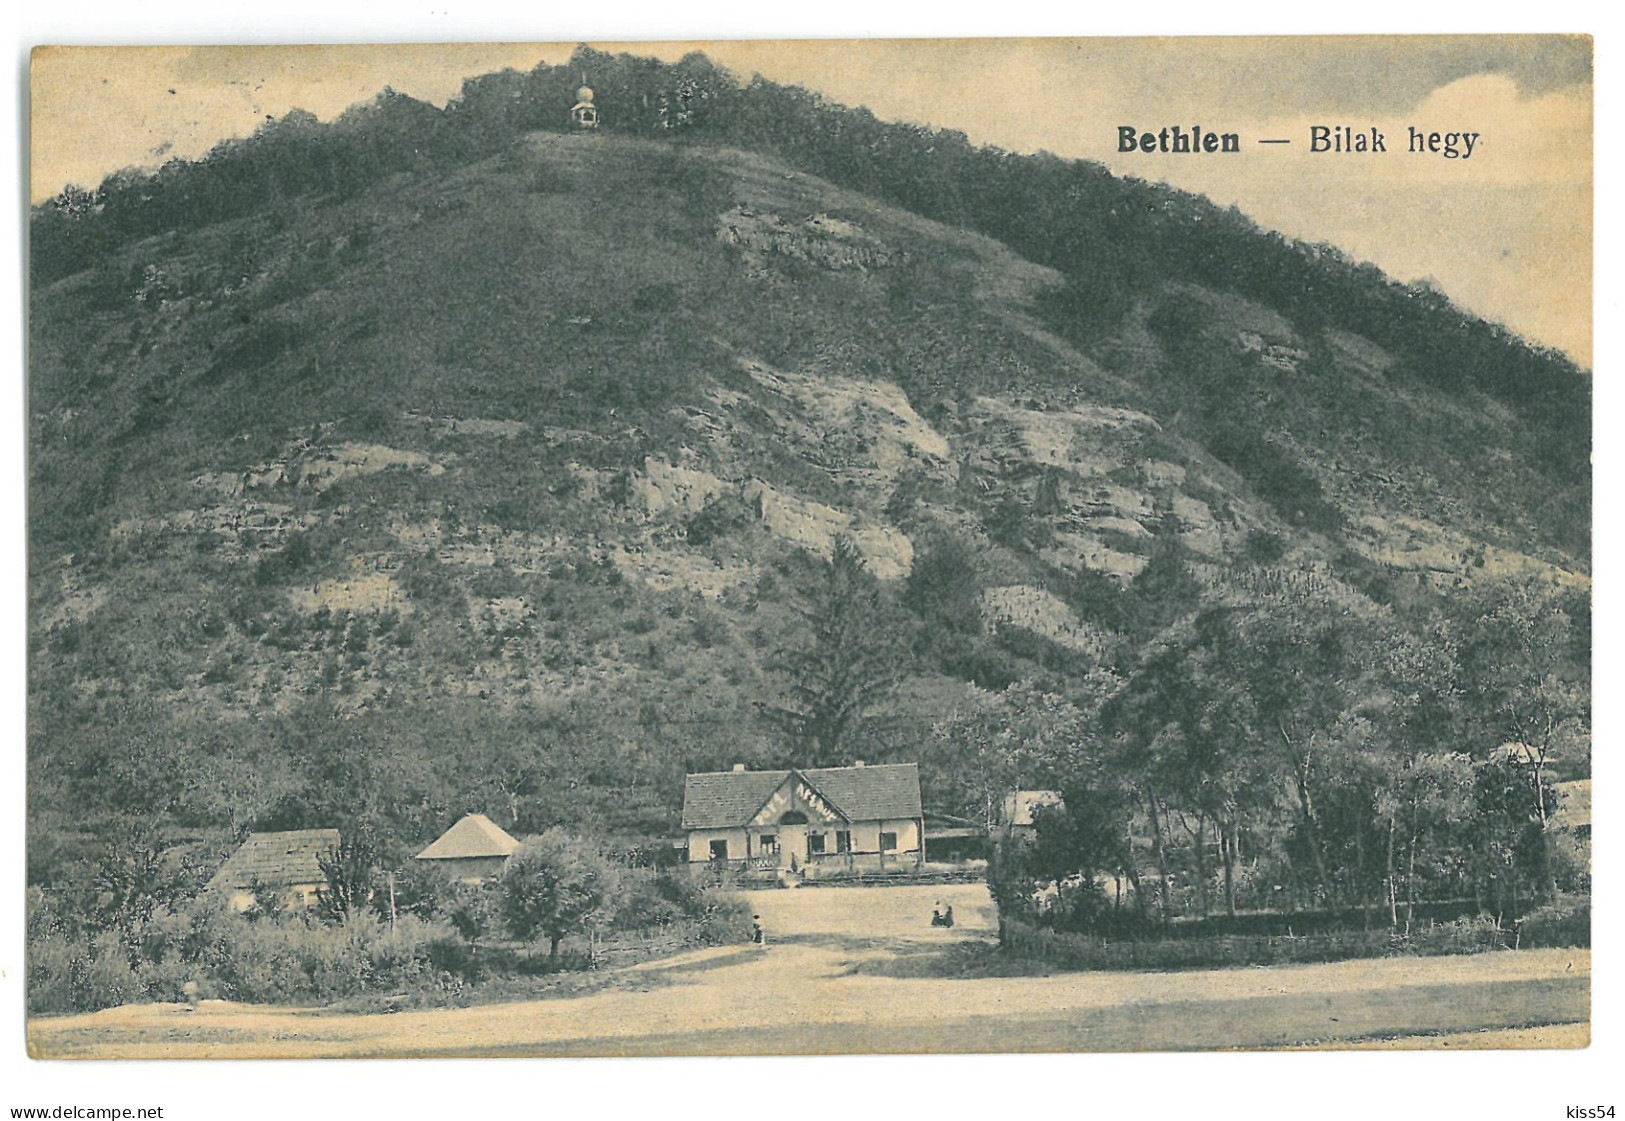 RO 39 - 22471 BECLEAN, Bistrita Nasaud, Romania - Old Postcard, CENSOR - Used - 1917 - Rumänien